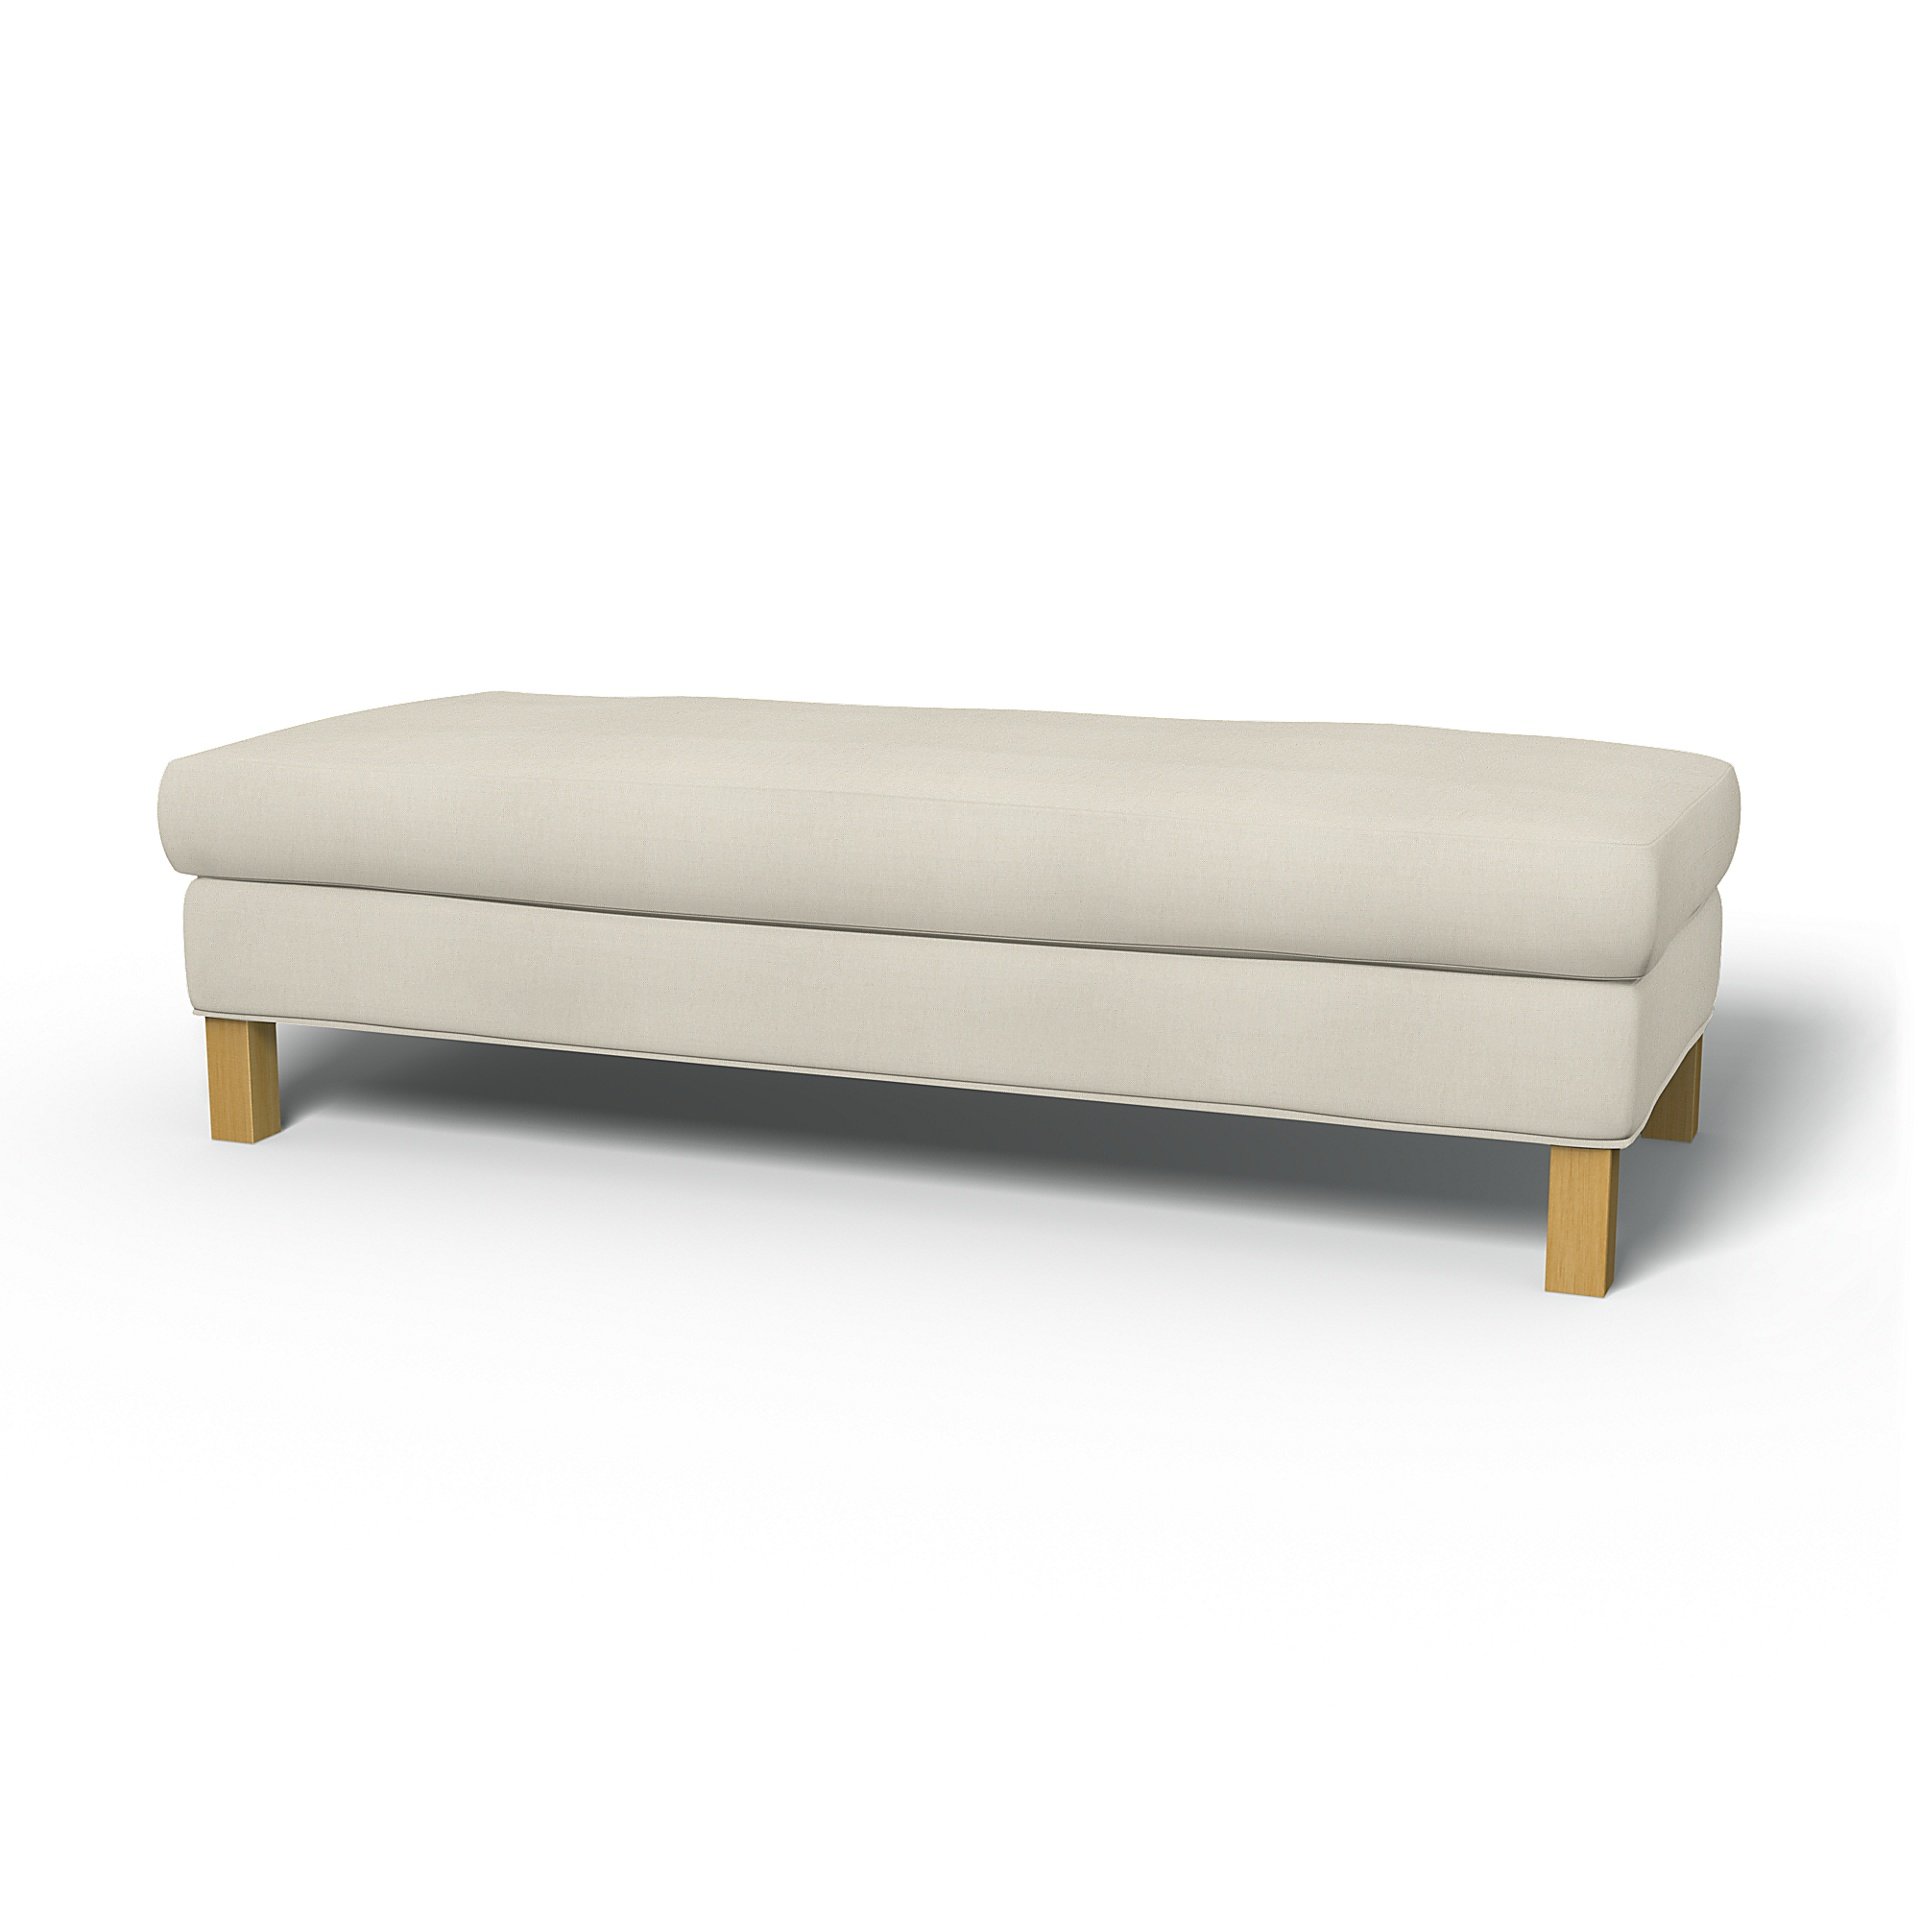 IKEA - Karlanda Bench Cover, Unbleached, Linen - Bemz